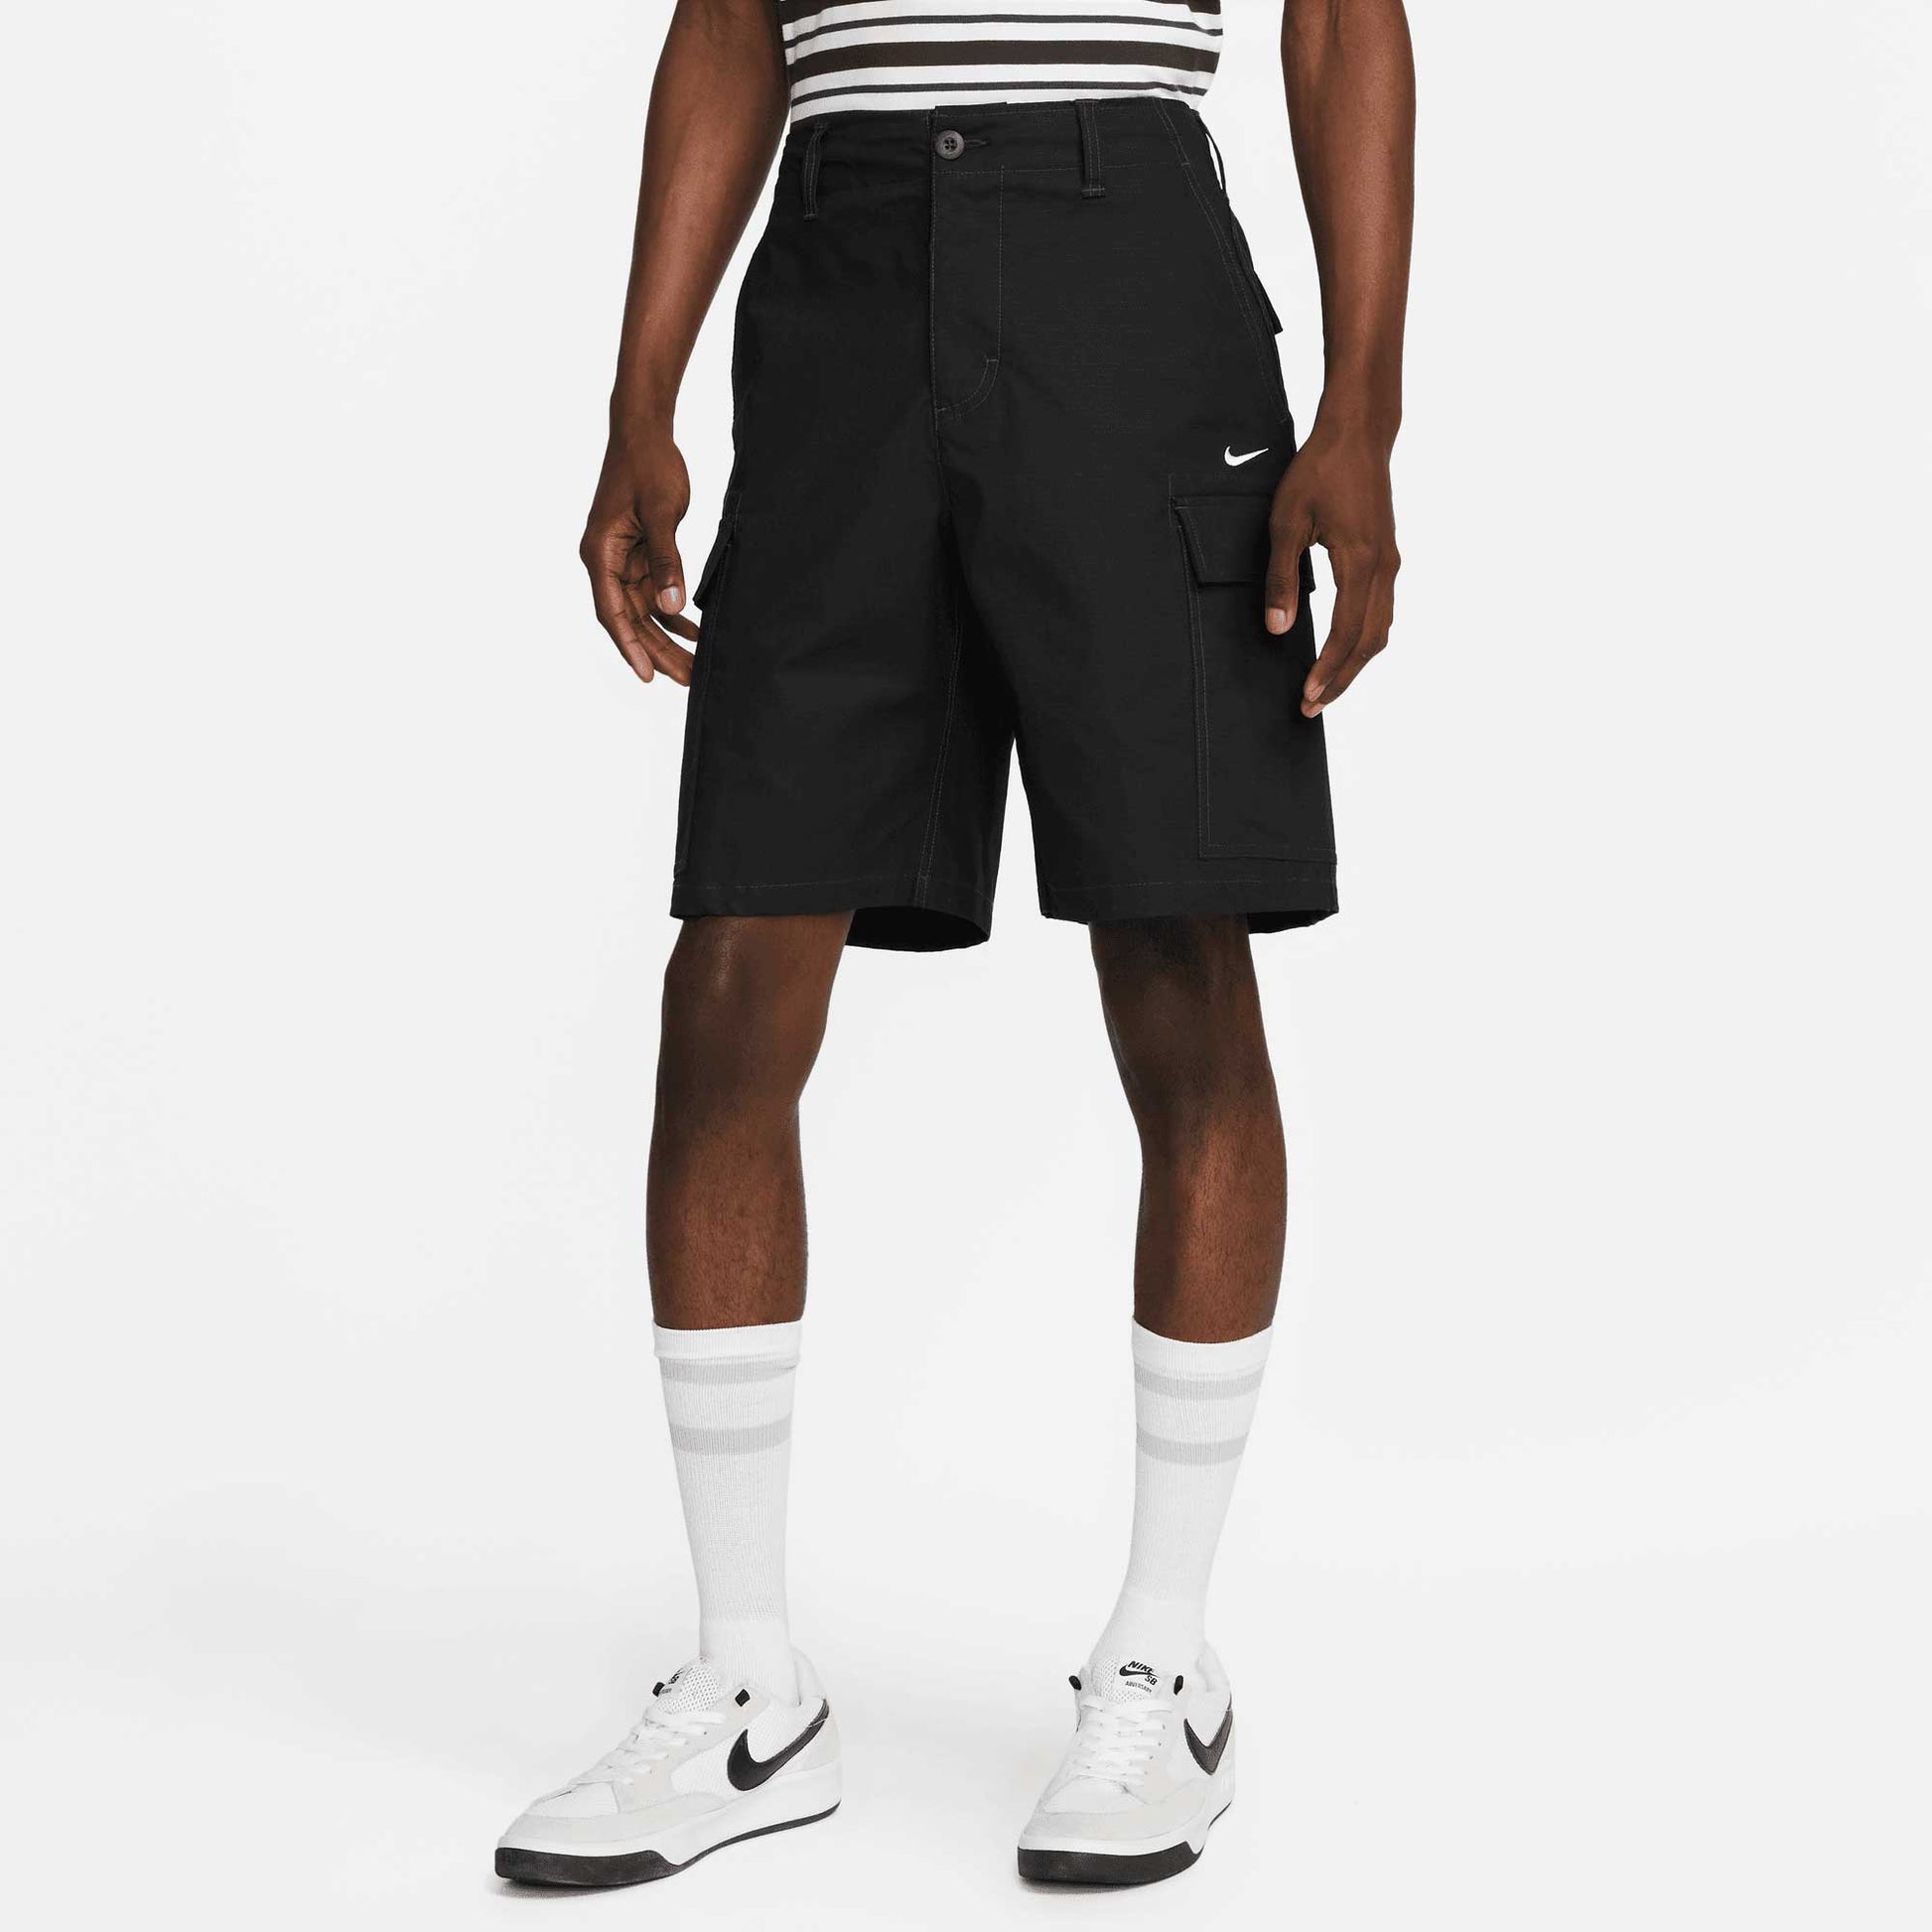 Nike SB Skate Cargo Shorts, black/white - Tiki Room Skateboards - 2